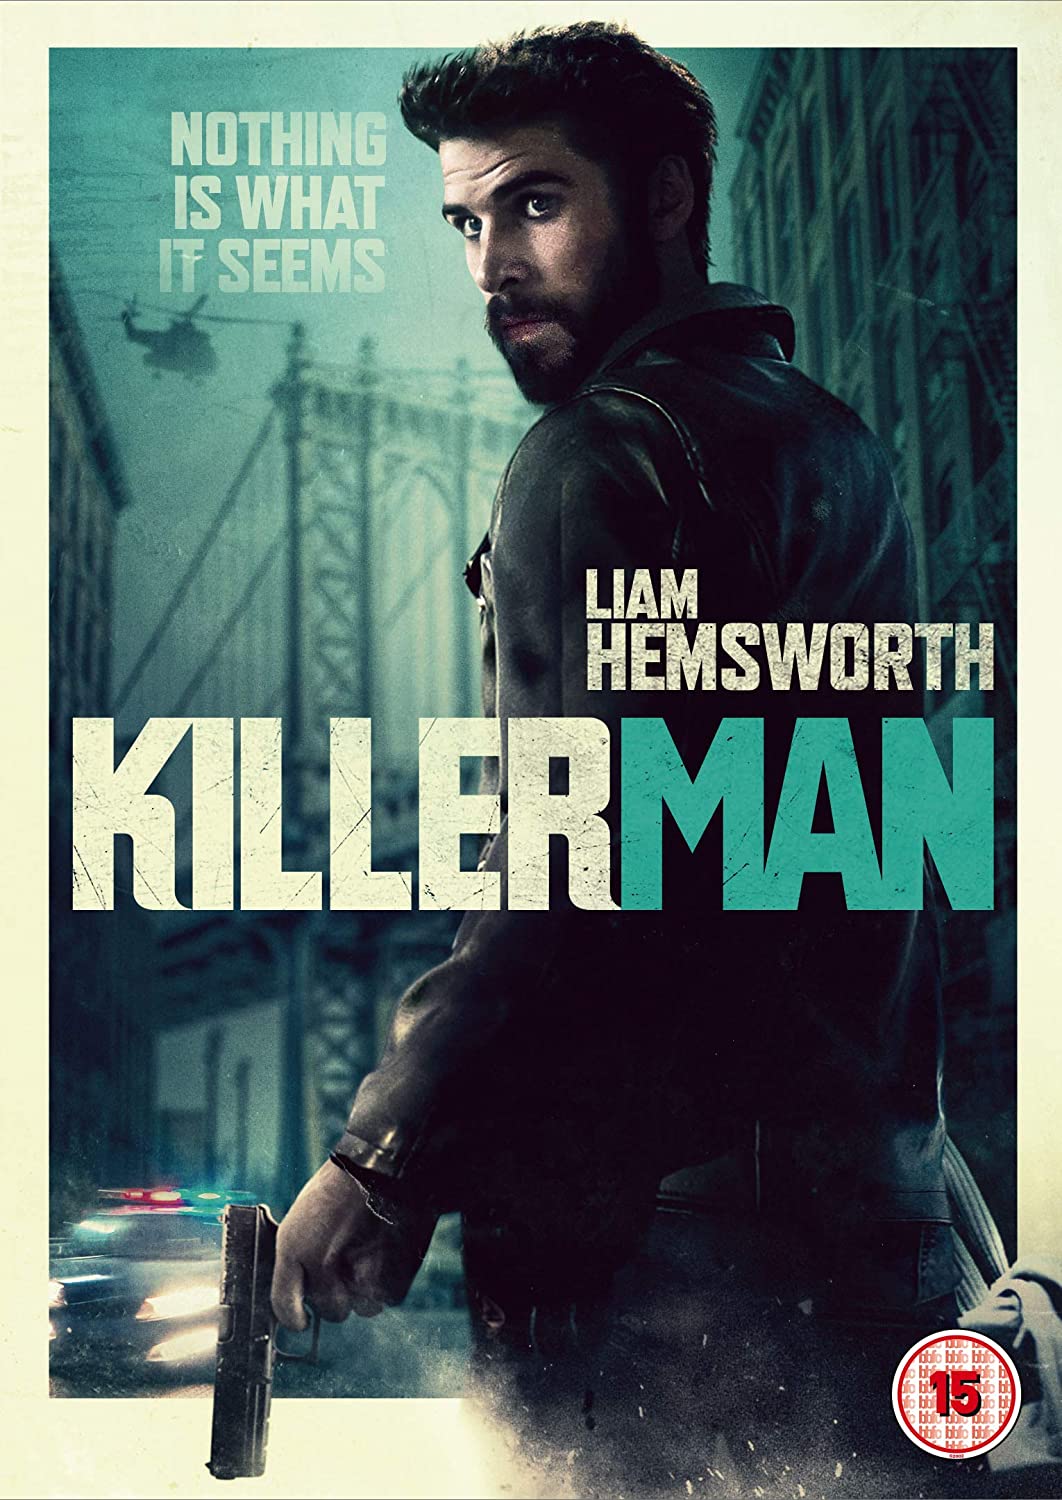 Killerman - Action/Crime [DVD]